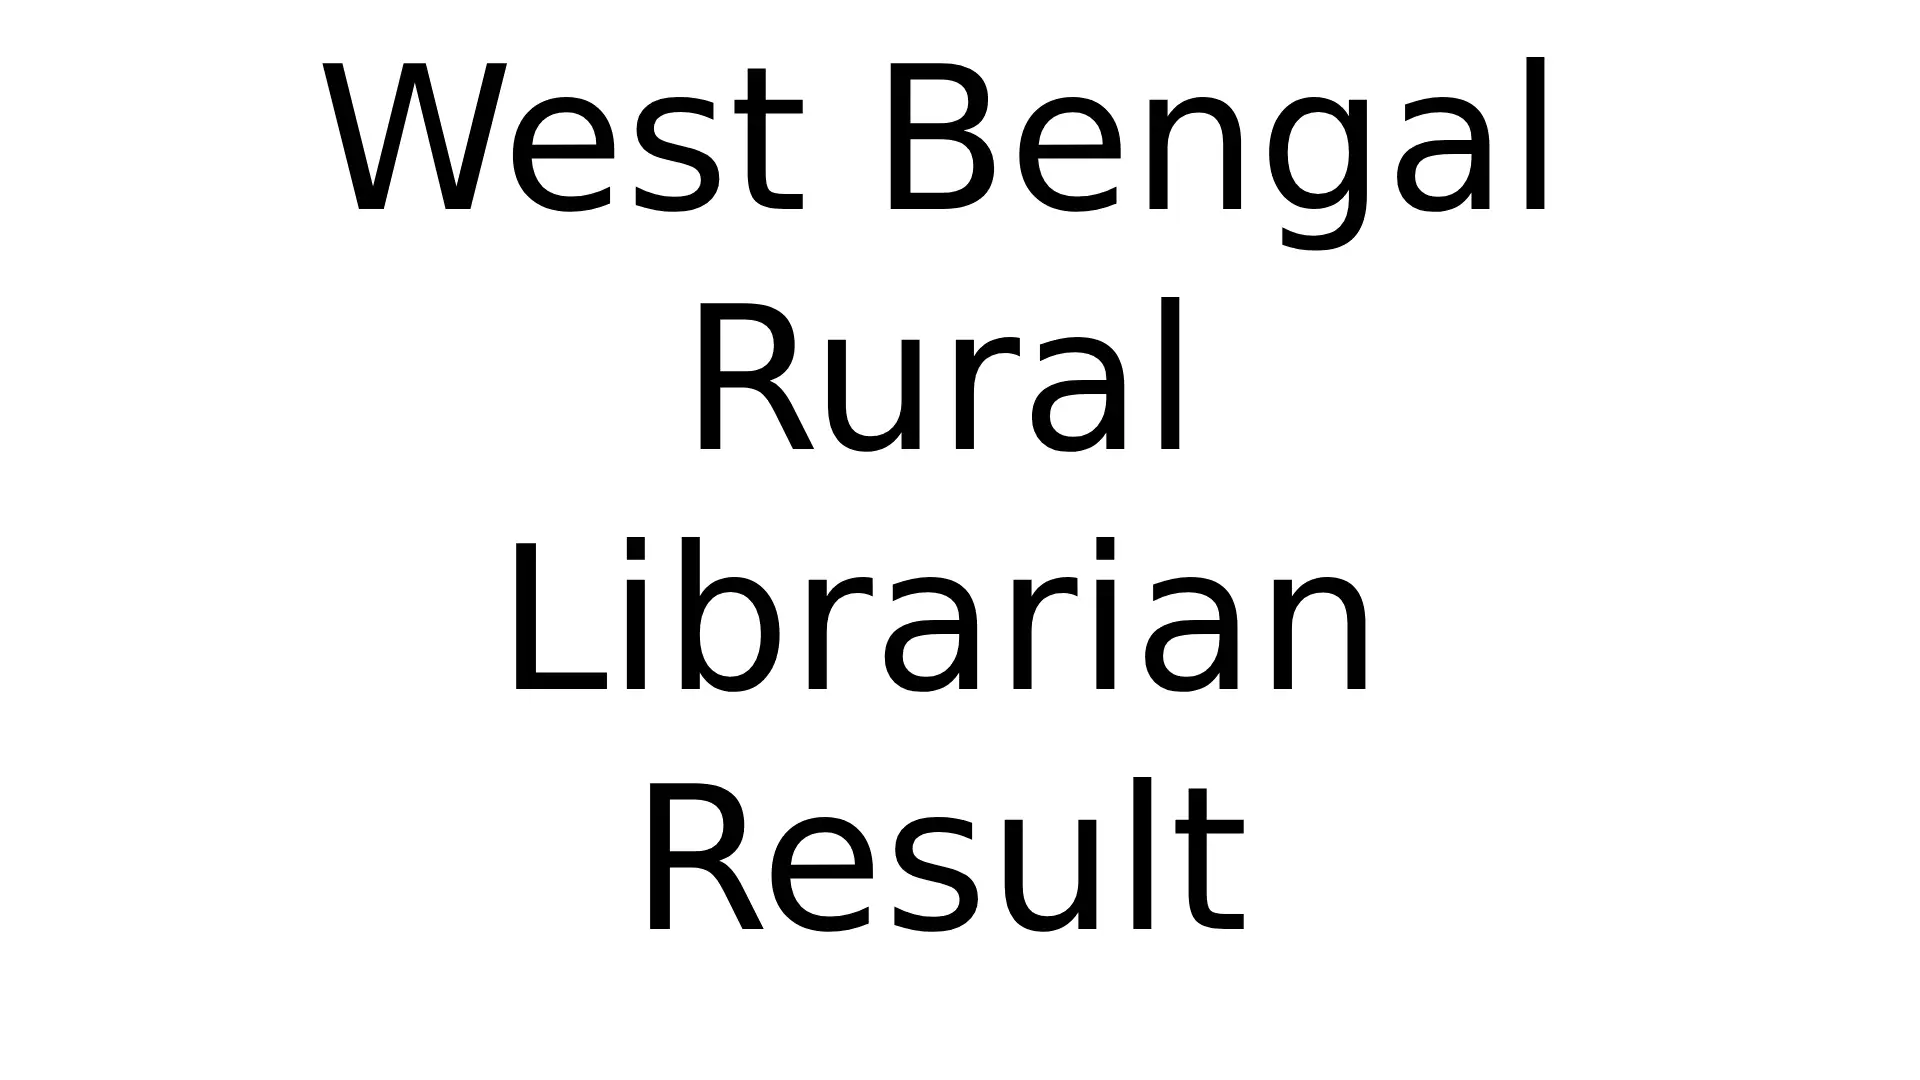 West Bengal Rural Librarian Result